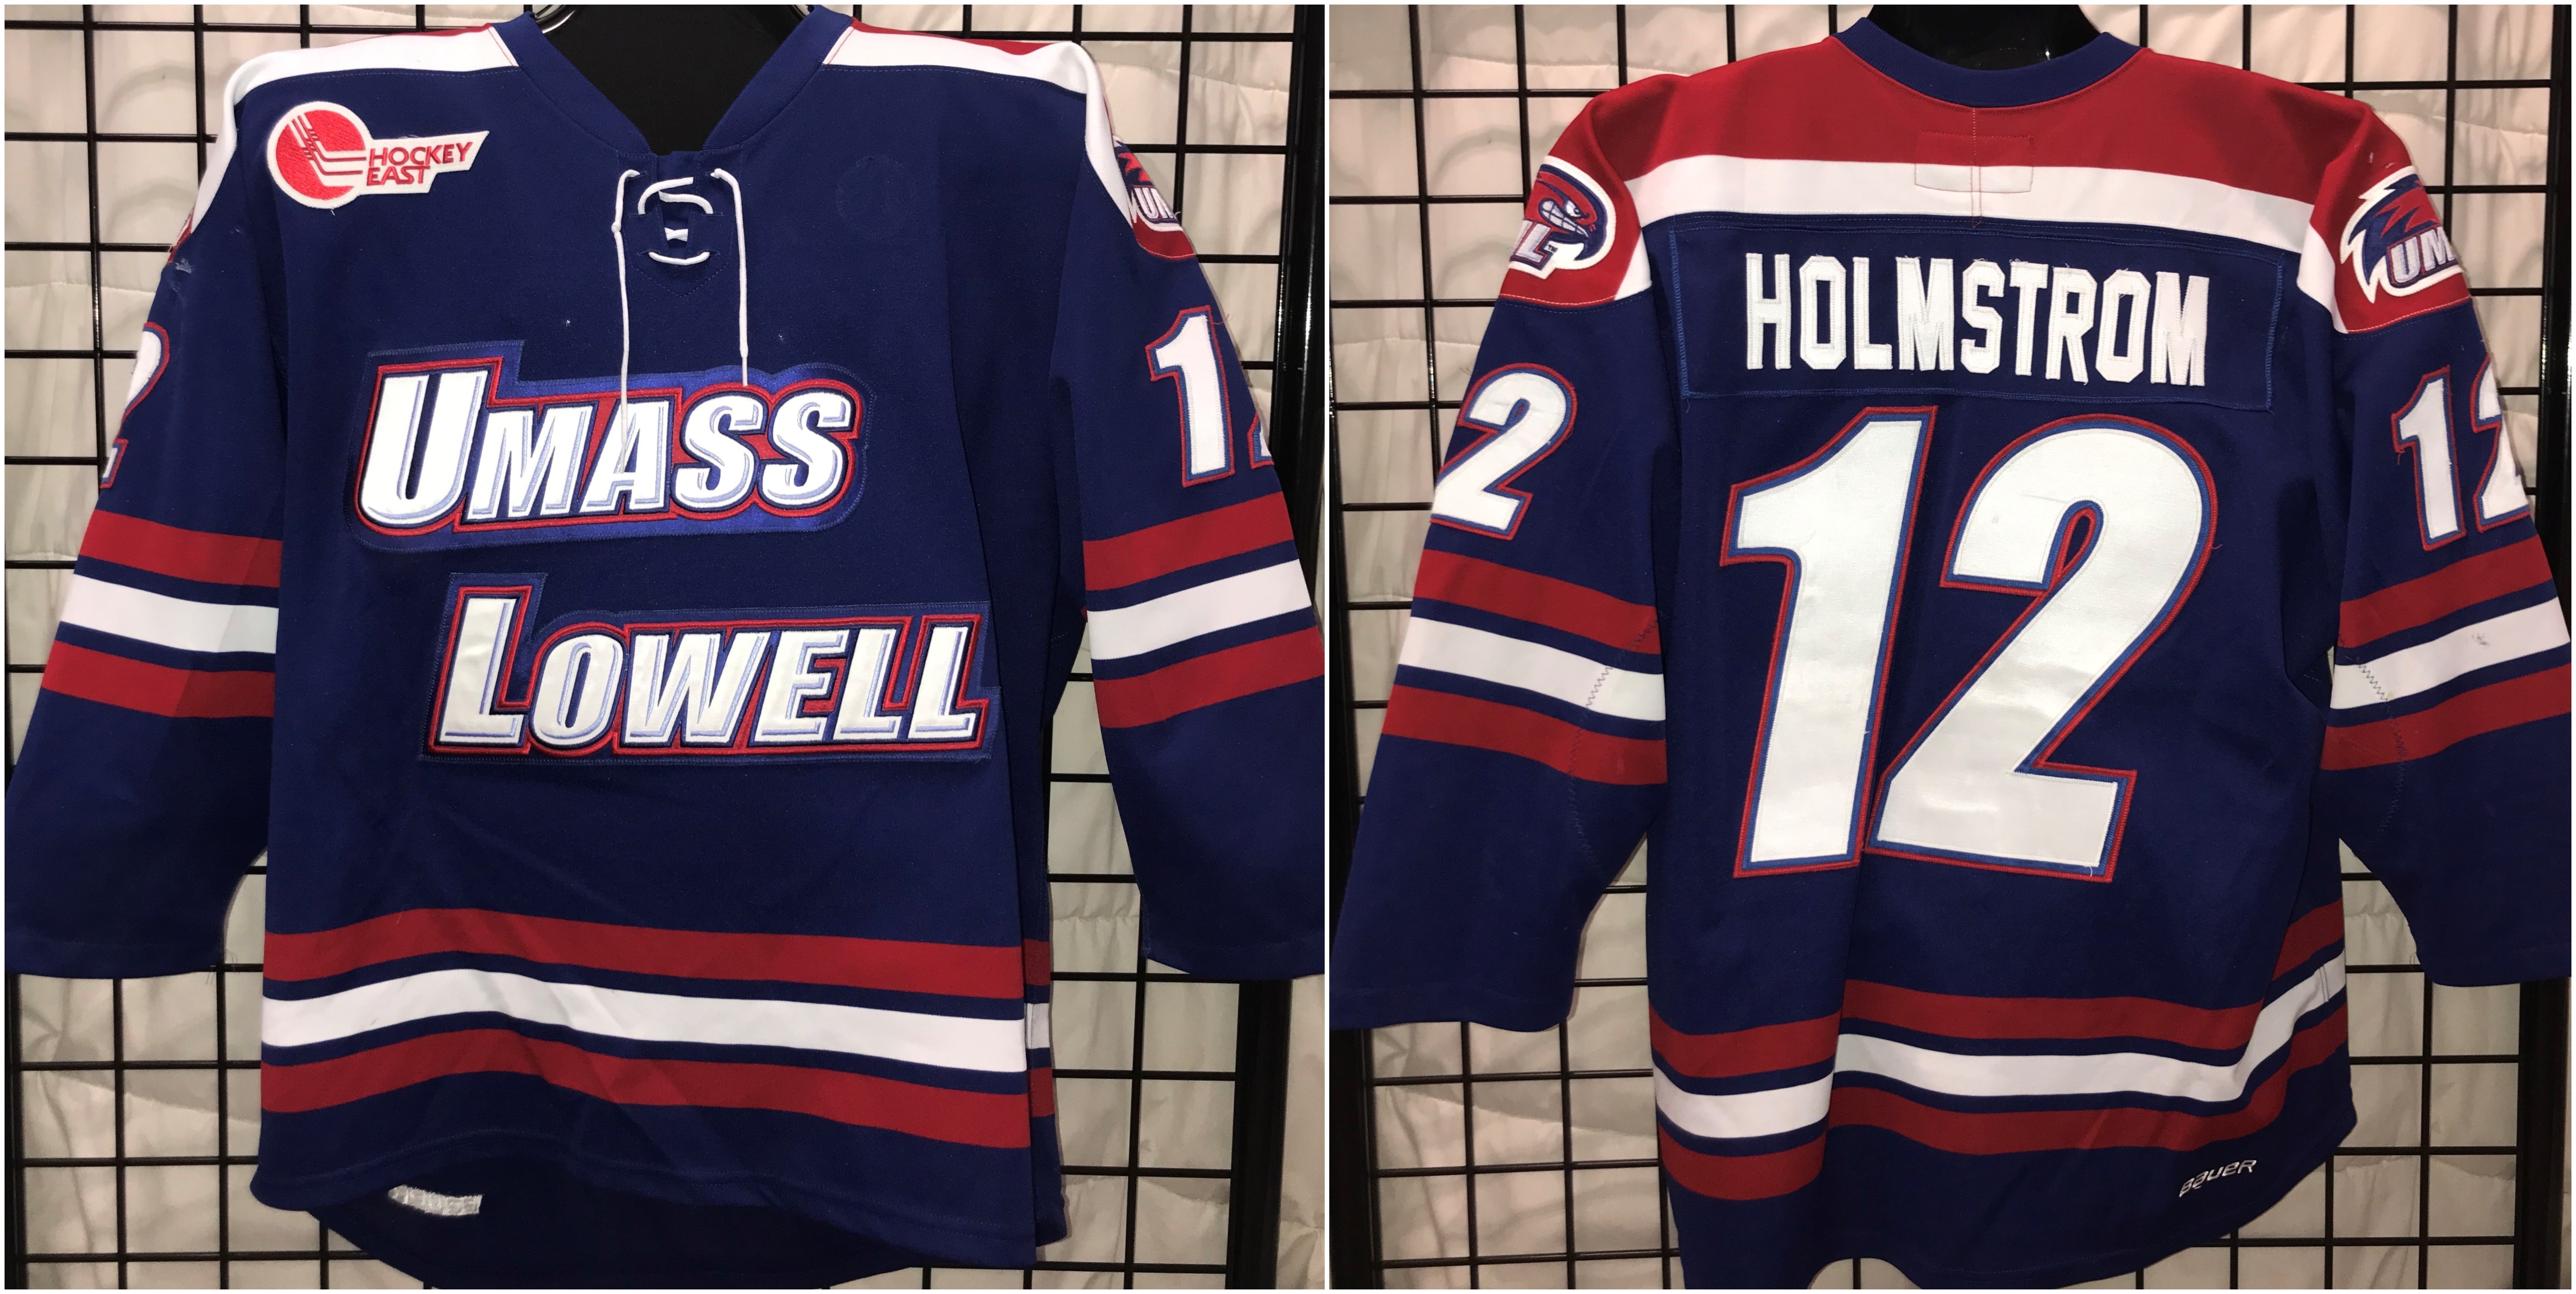 UMass Lowell River Hawks 12 Josh Holmstrom Navy Men's Hockey Jersey